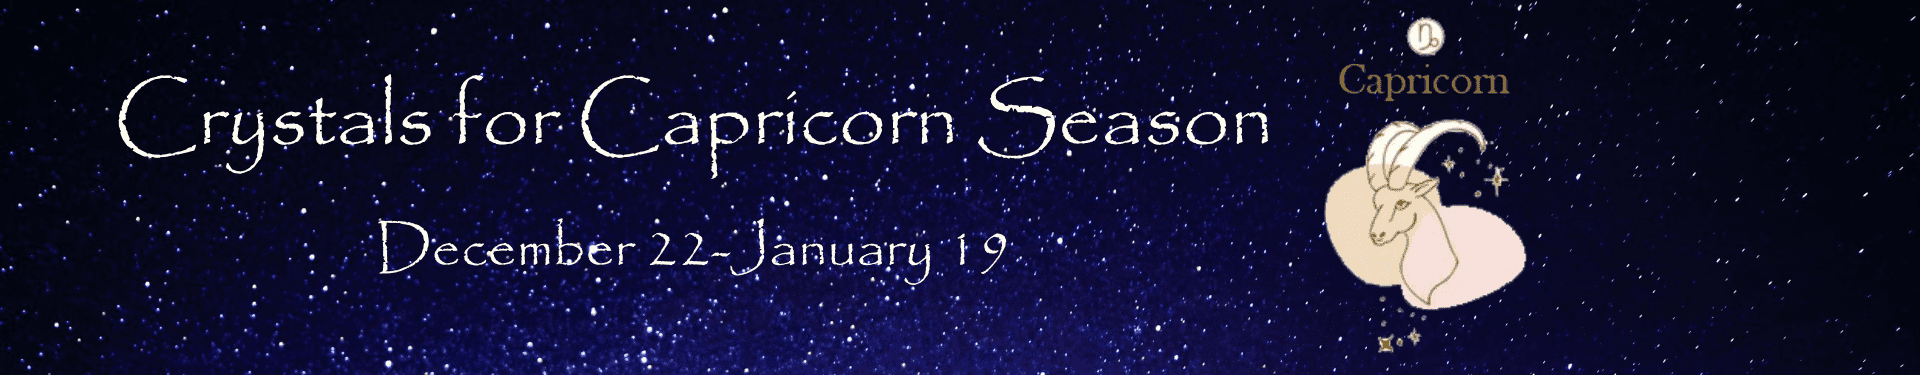 Capricorn Season Banner